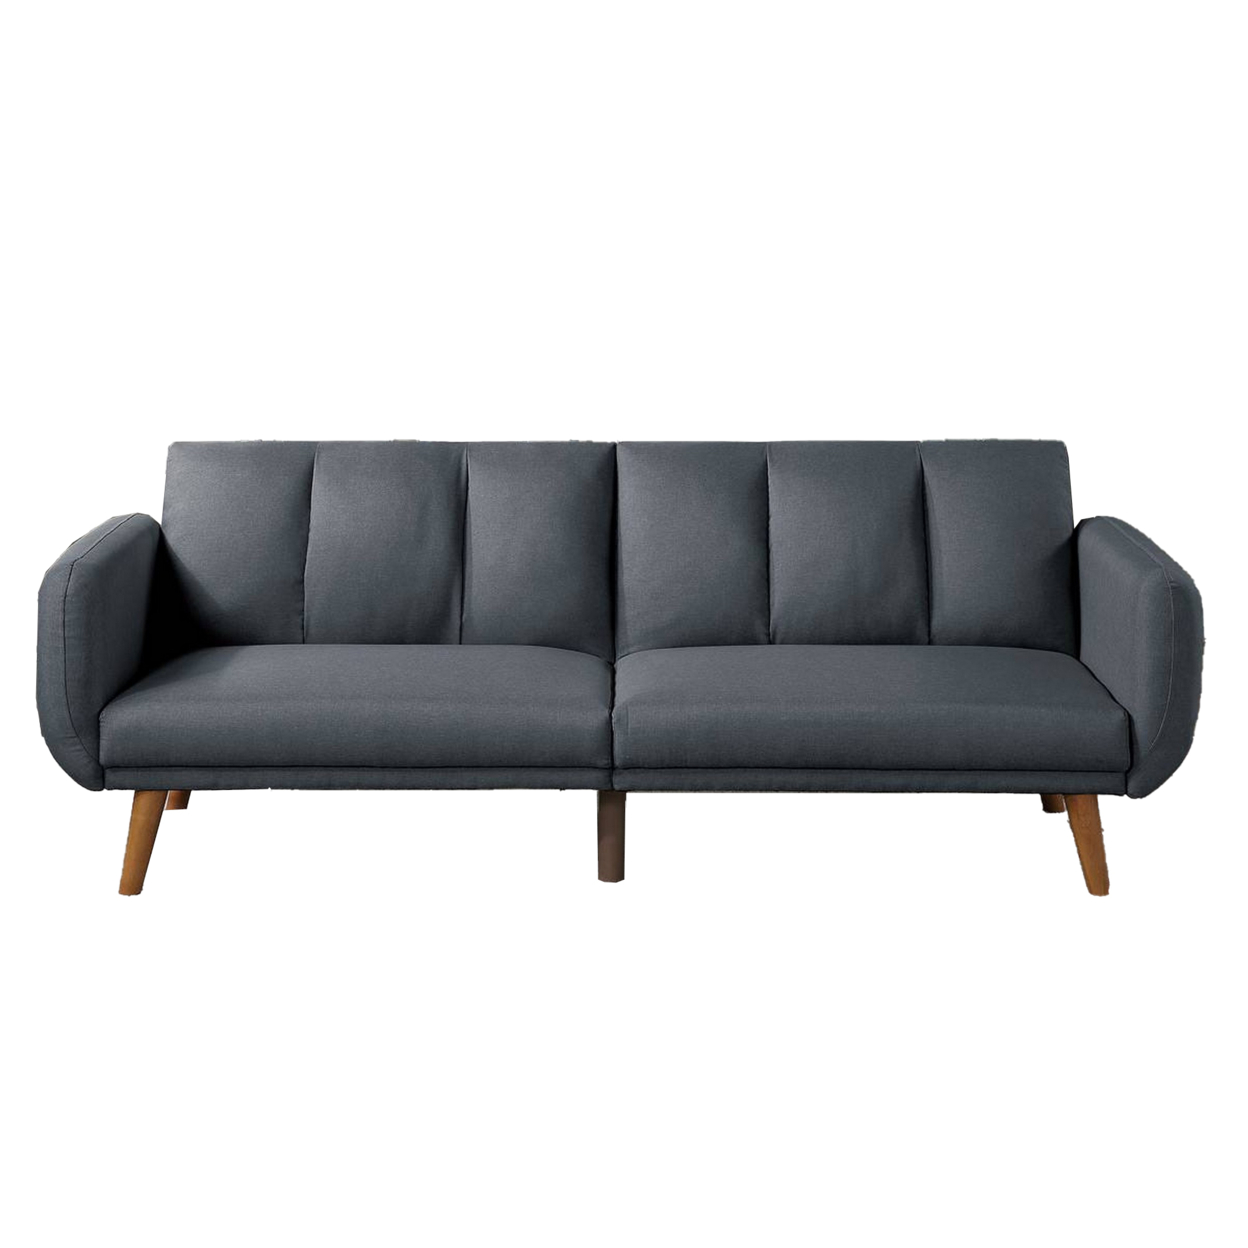 Adjustable Upholstered Sofa With Track Armrests And Angled Legs, Light Gray- Saltoro Sherpi